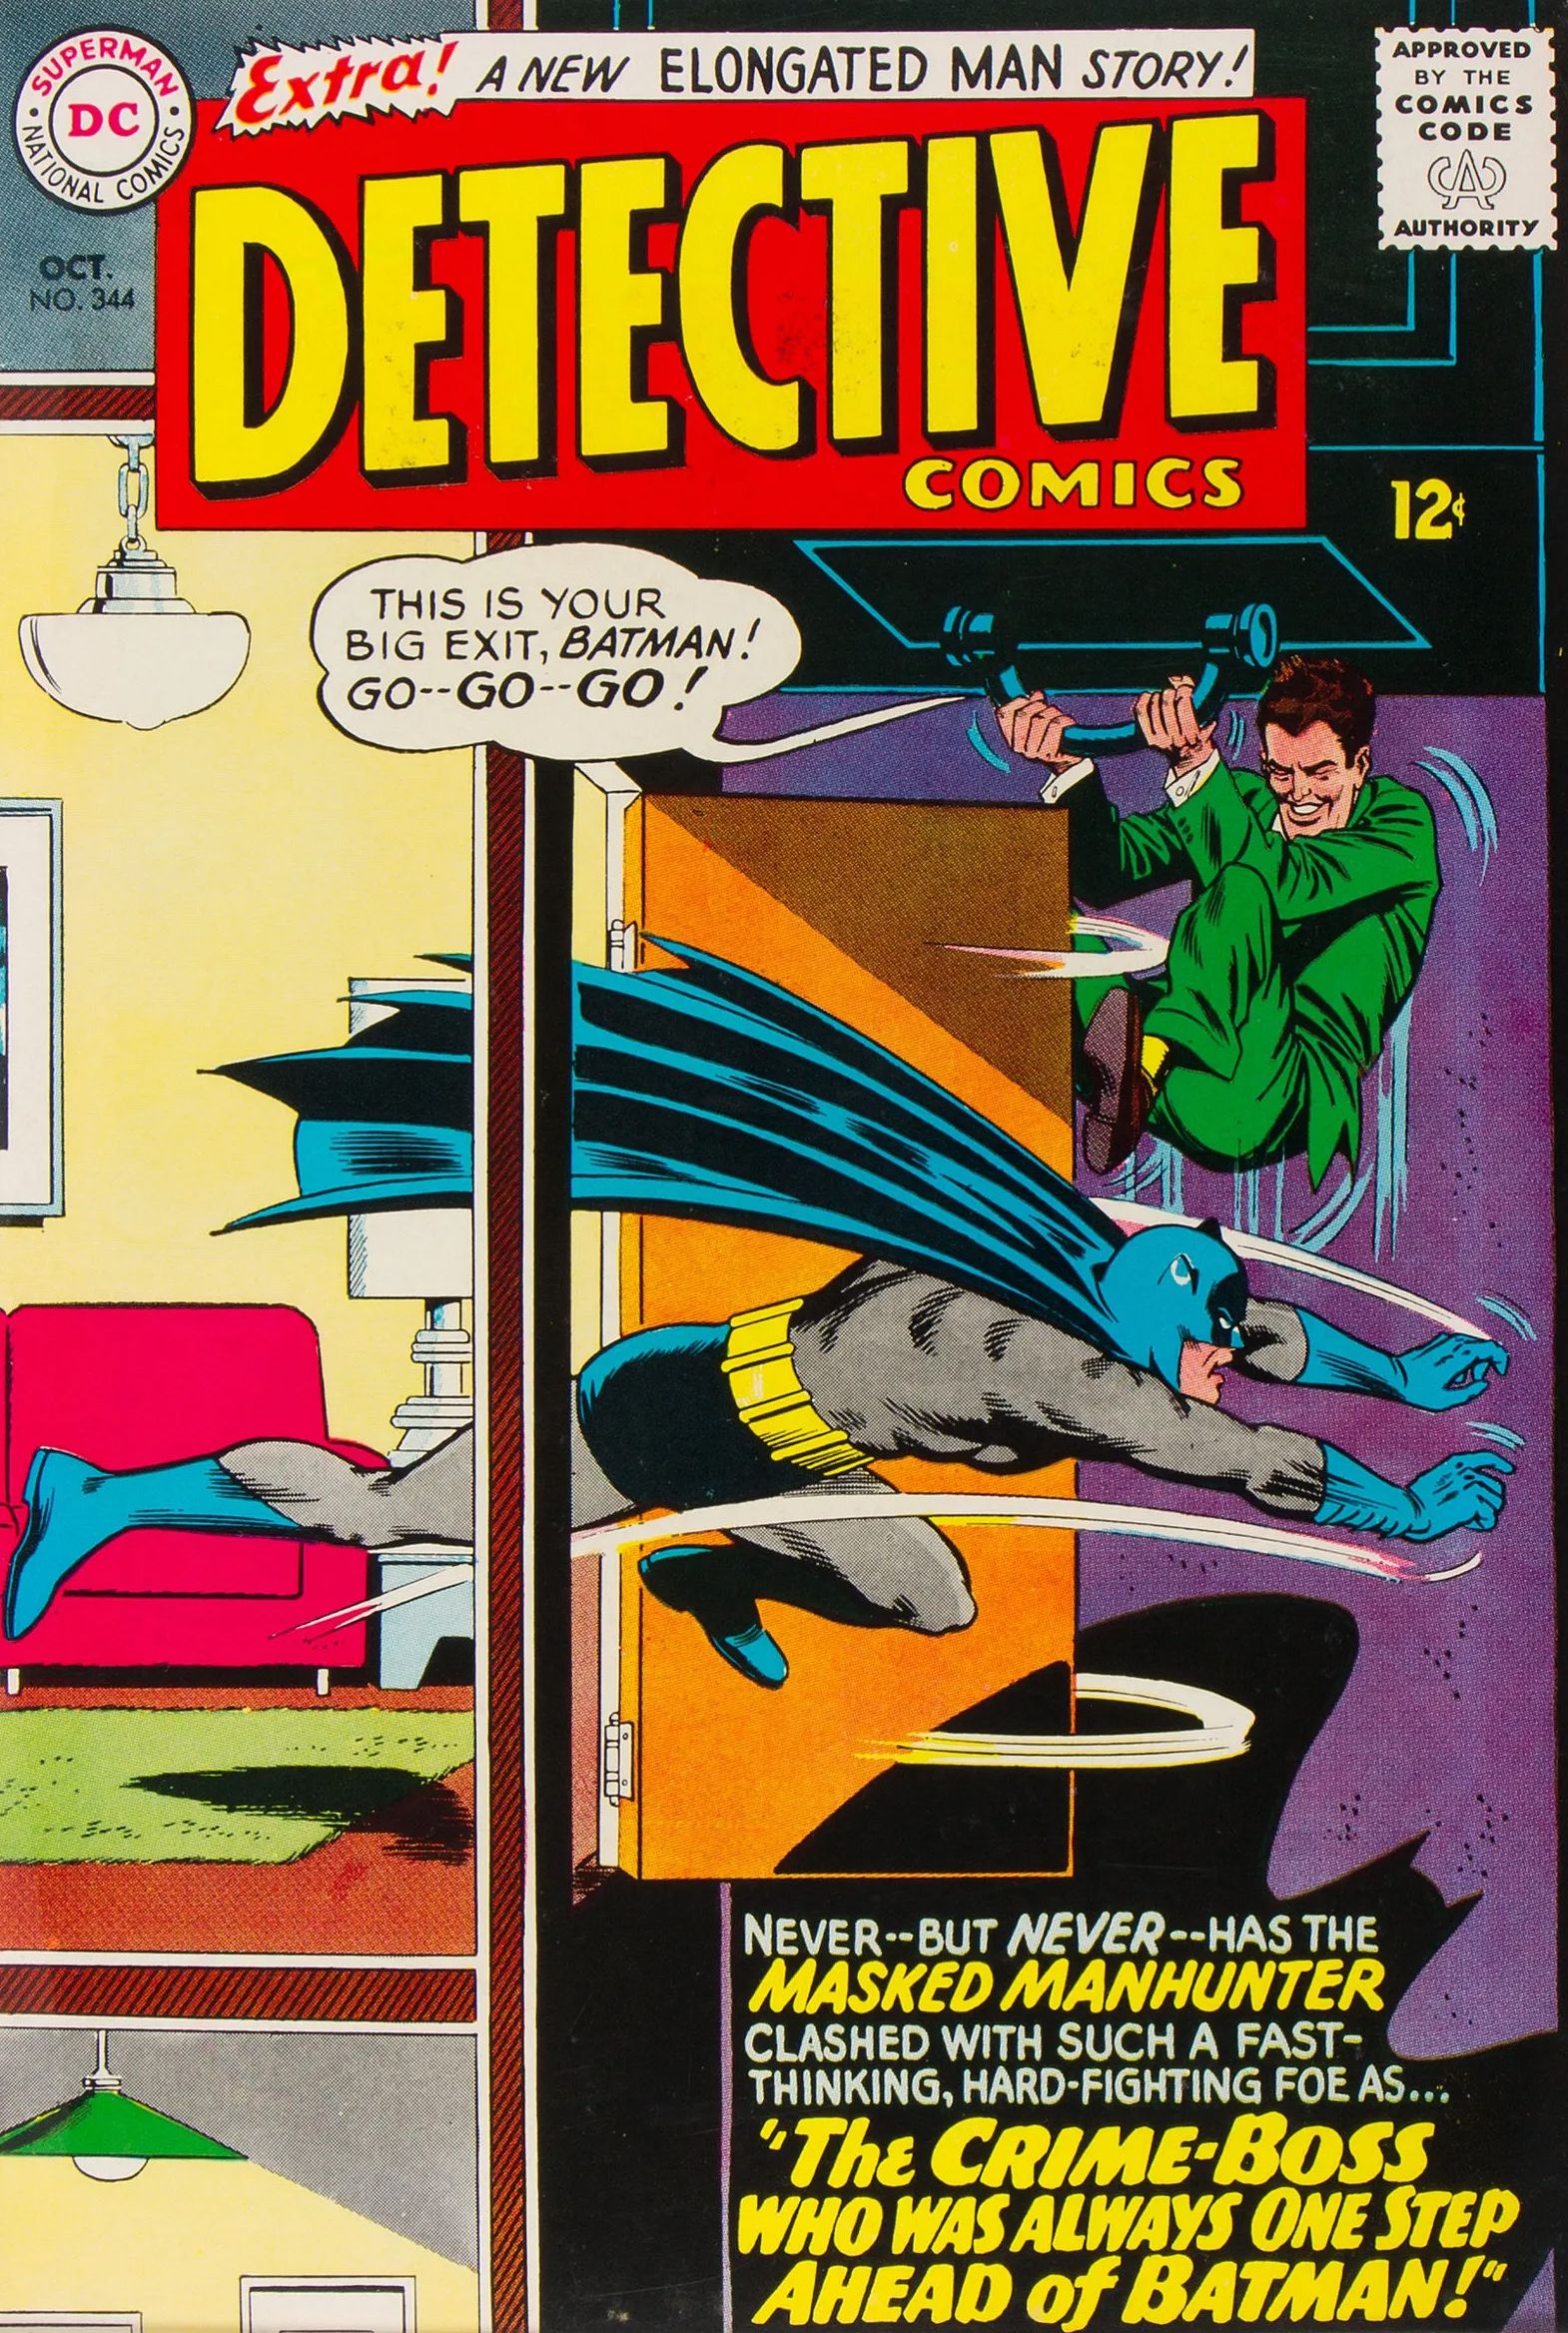 Detective Comics #344 Comic